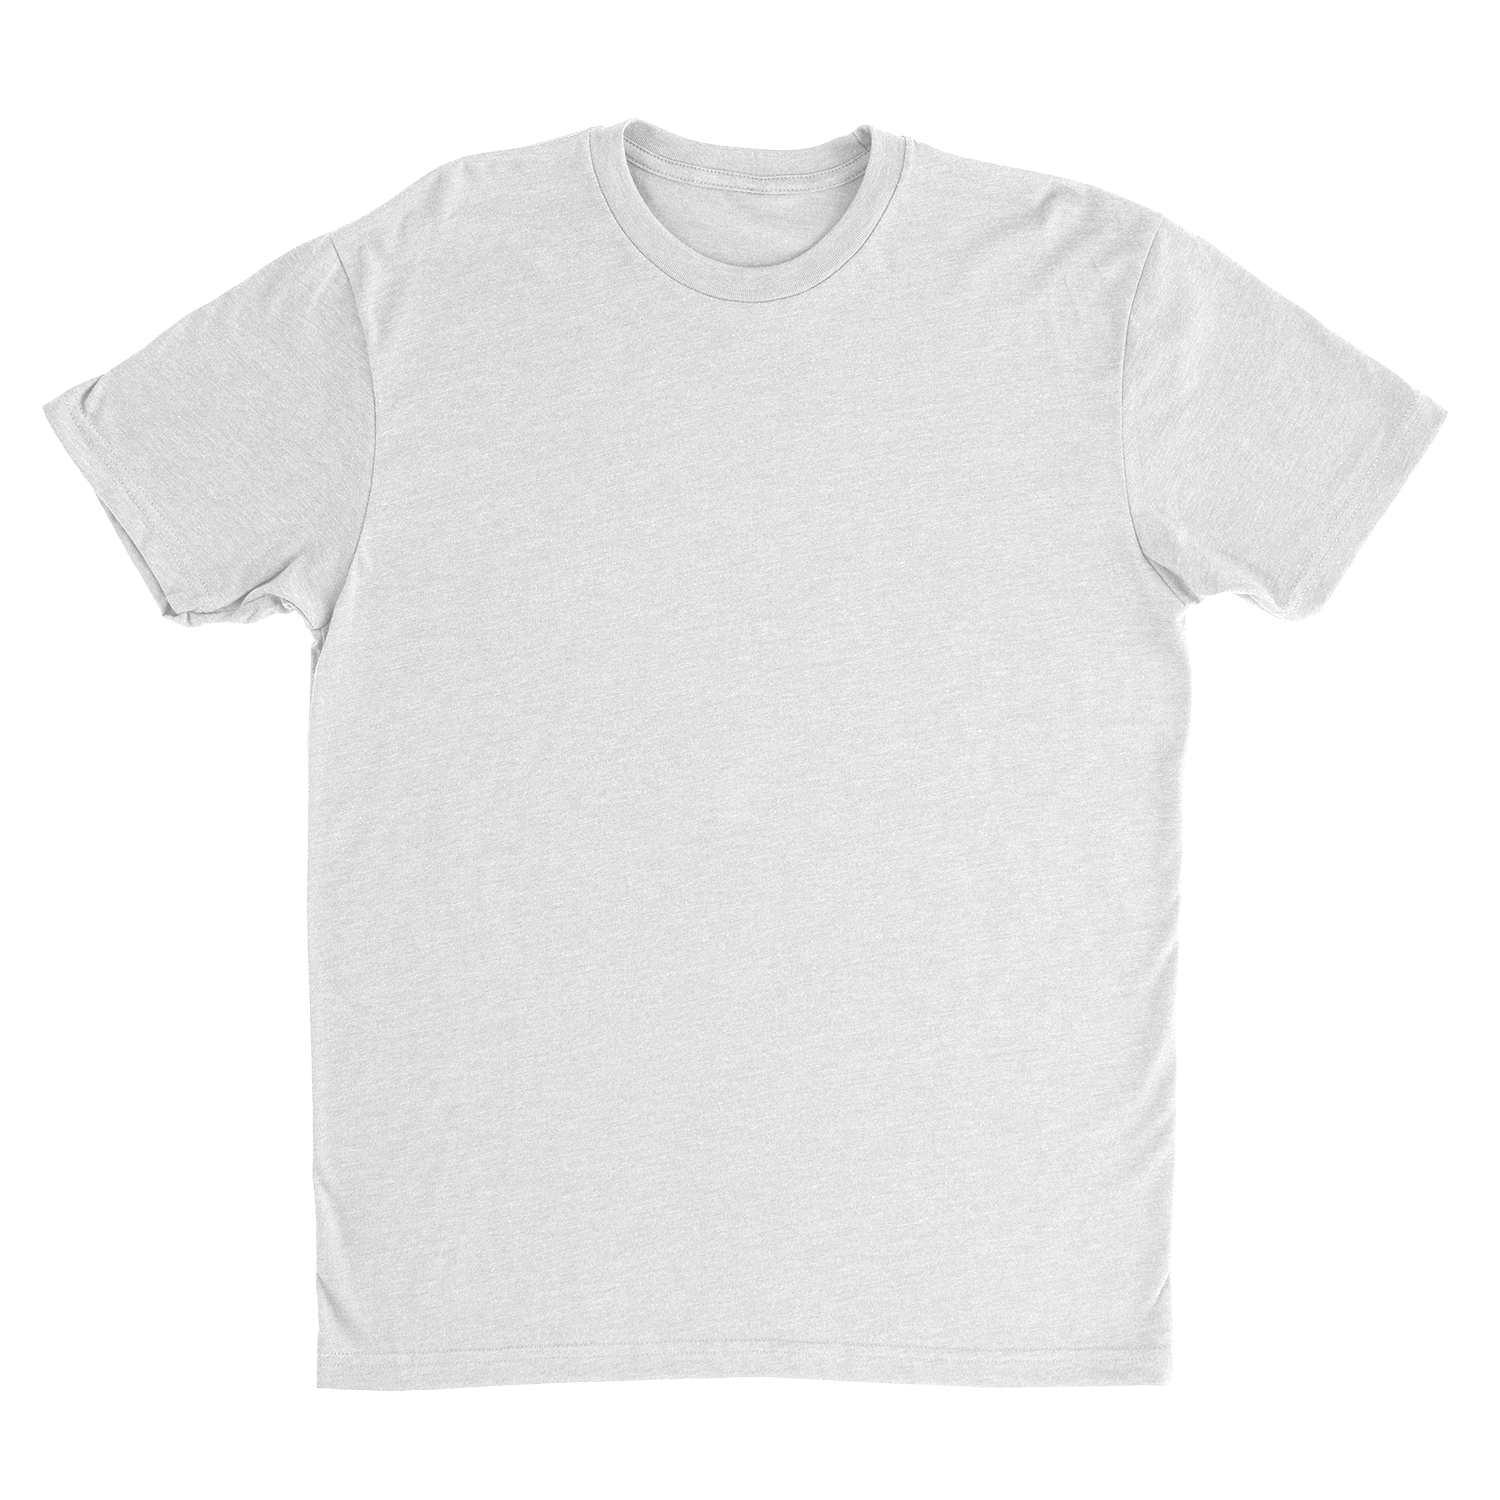 Buy Next Level T Shirt Mockup Cheap Online